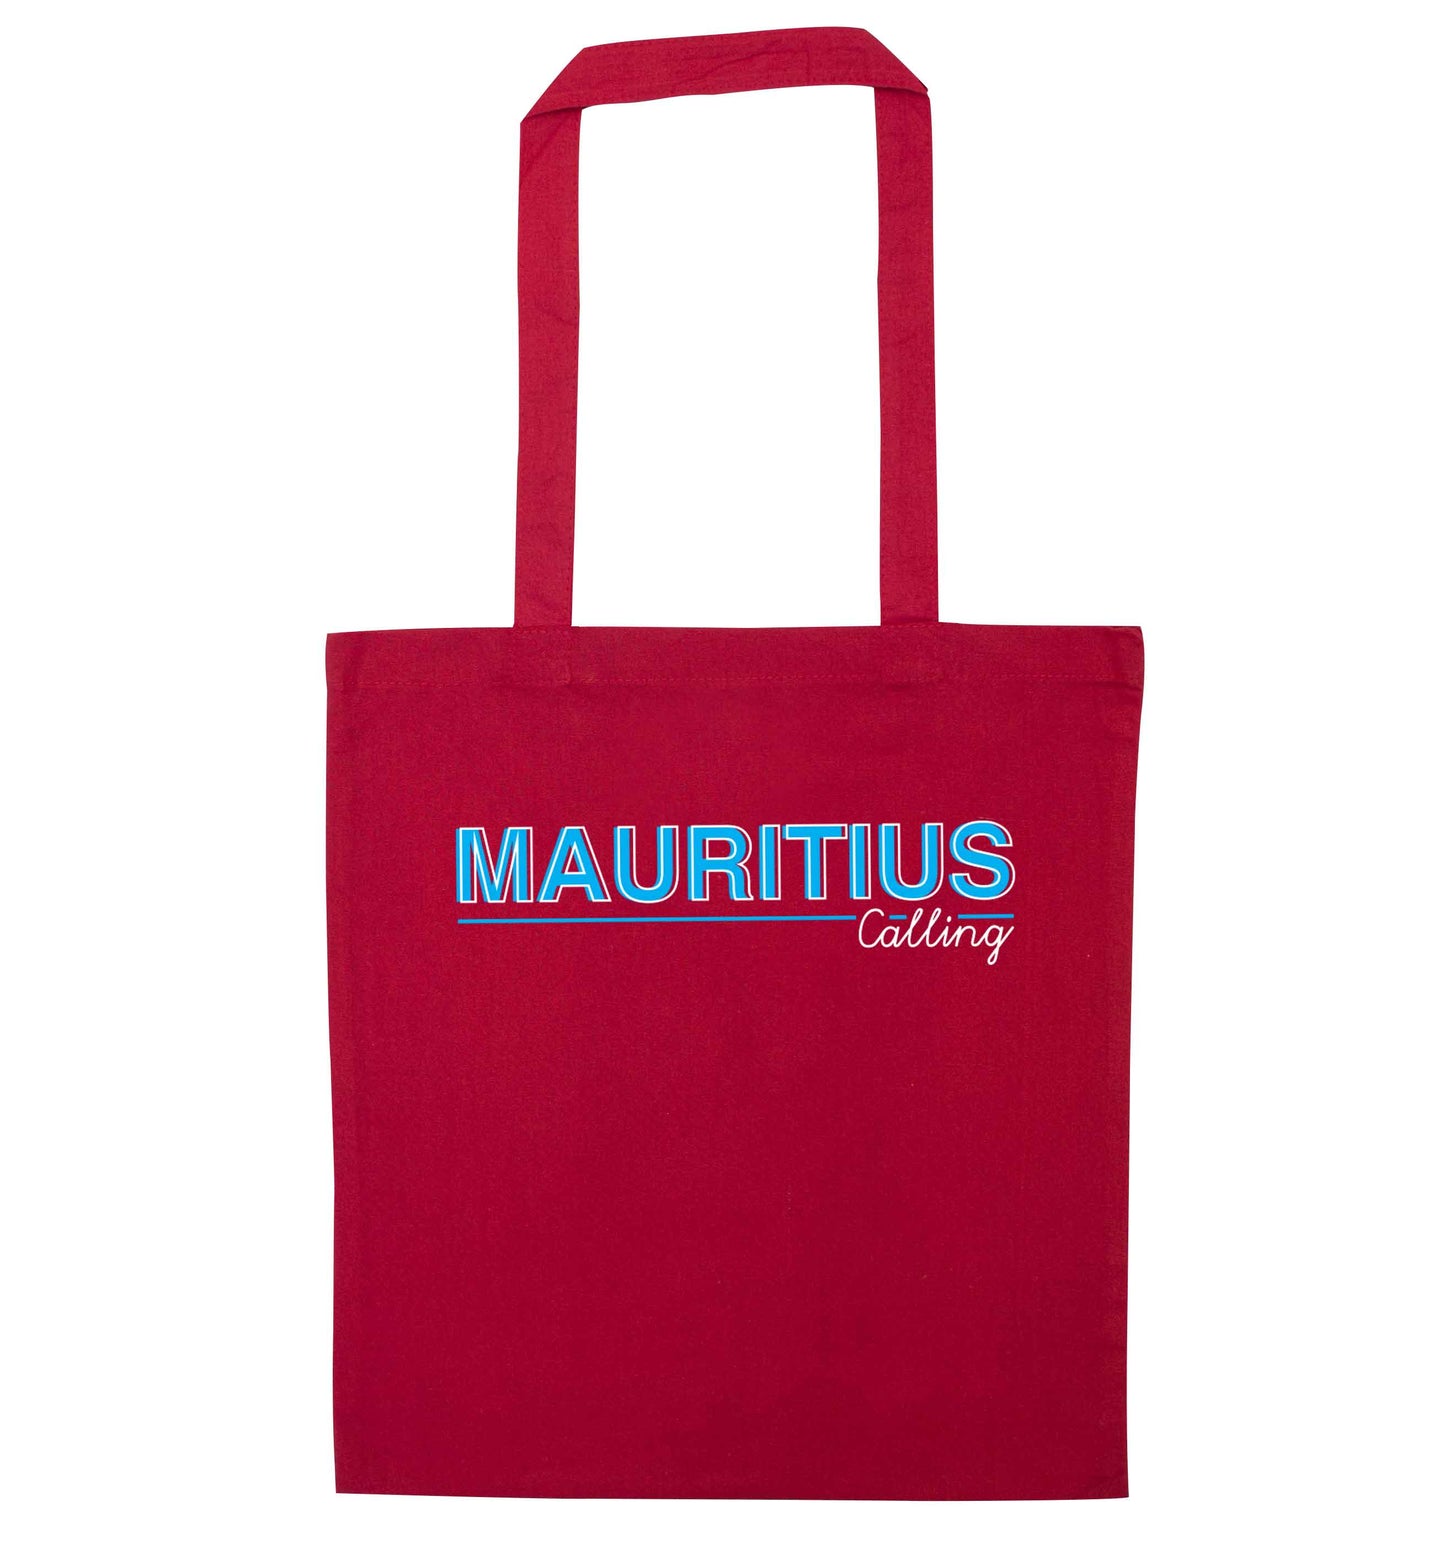 Mauritius calling red tote bag